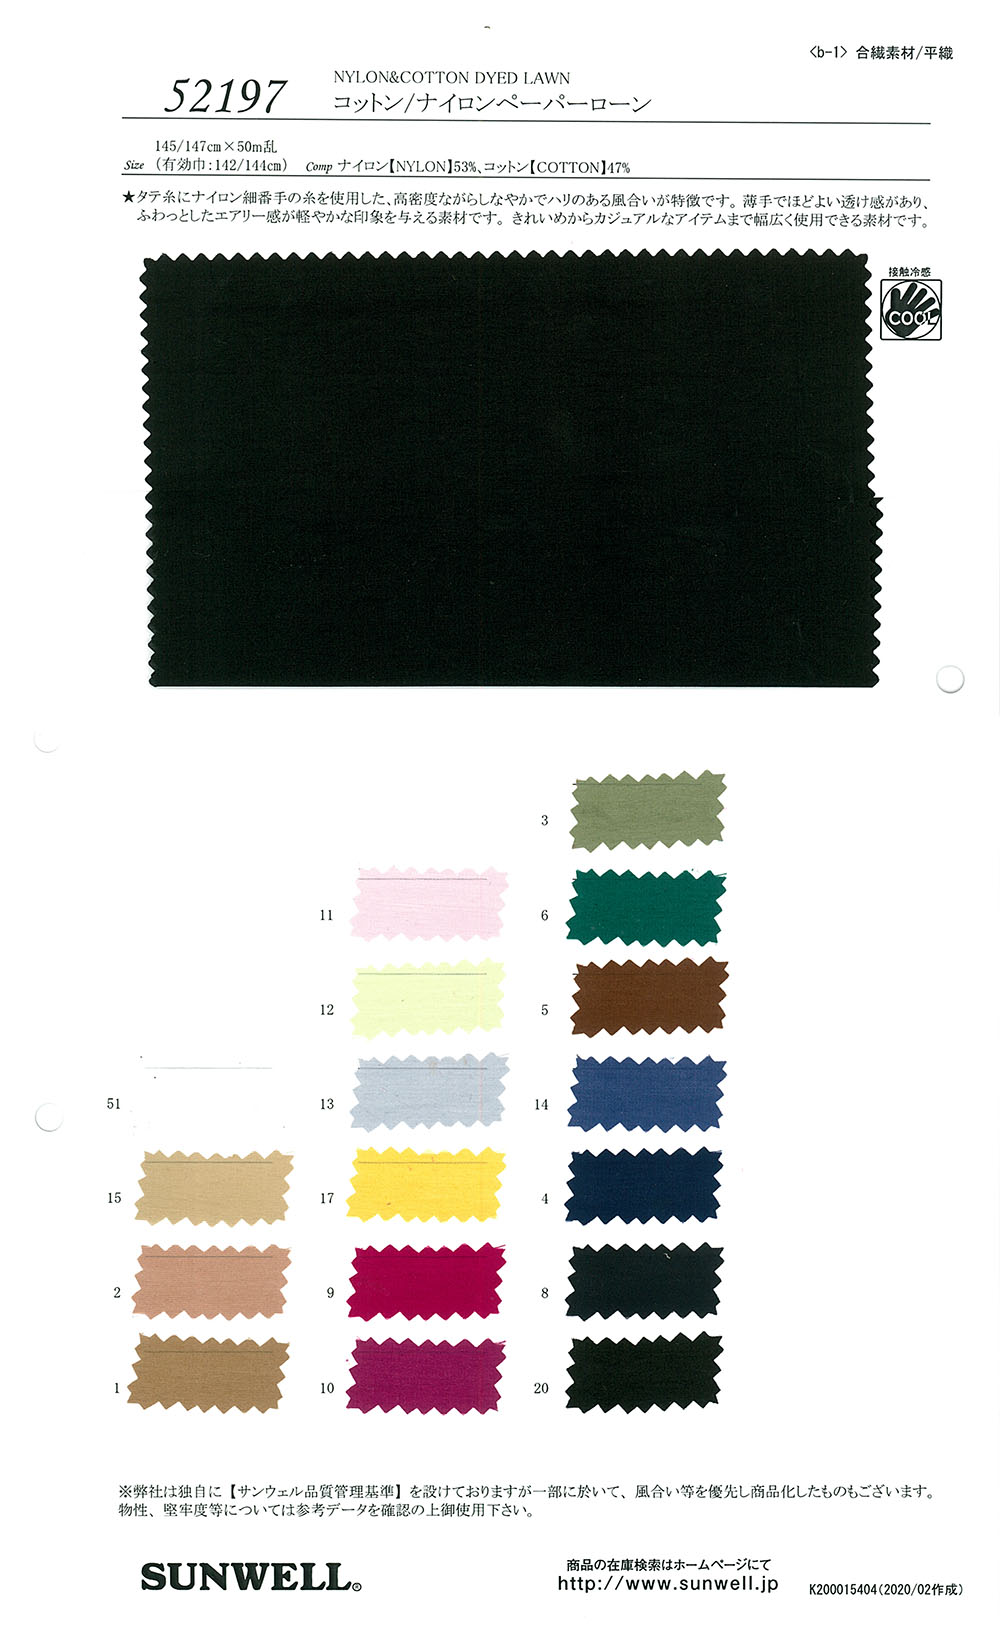 52197 Papierrasen Aus Baumwolle/Nylon[Textilgewebe] SUNWELL